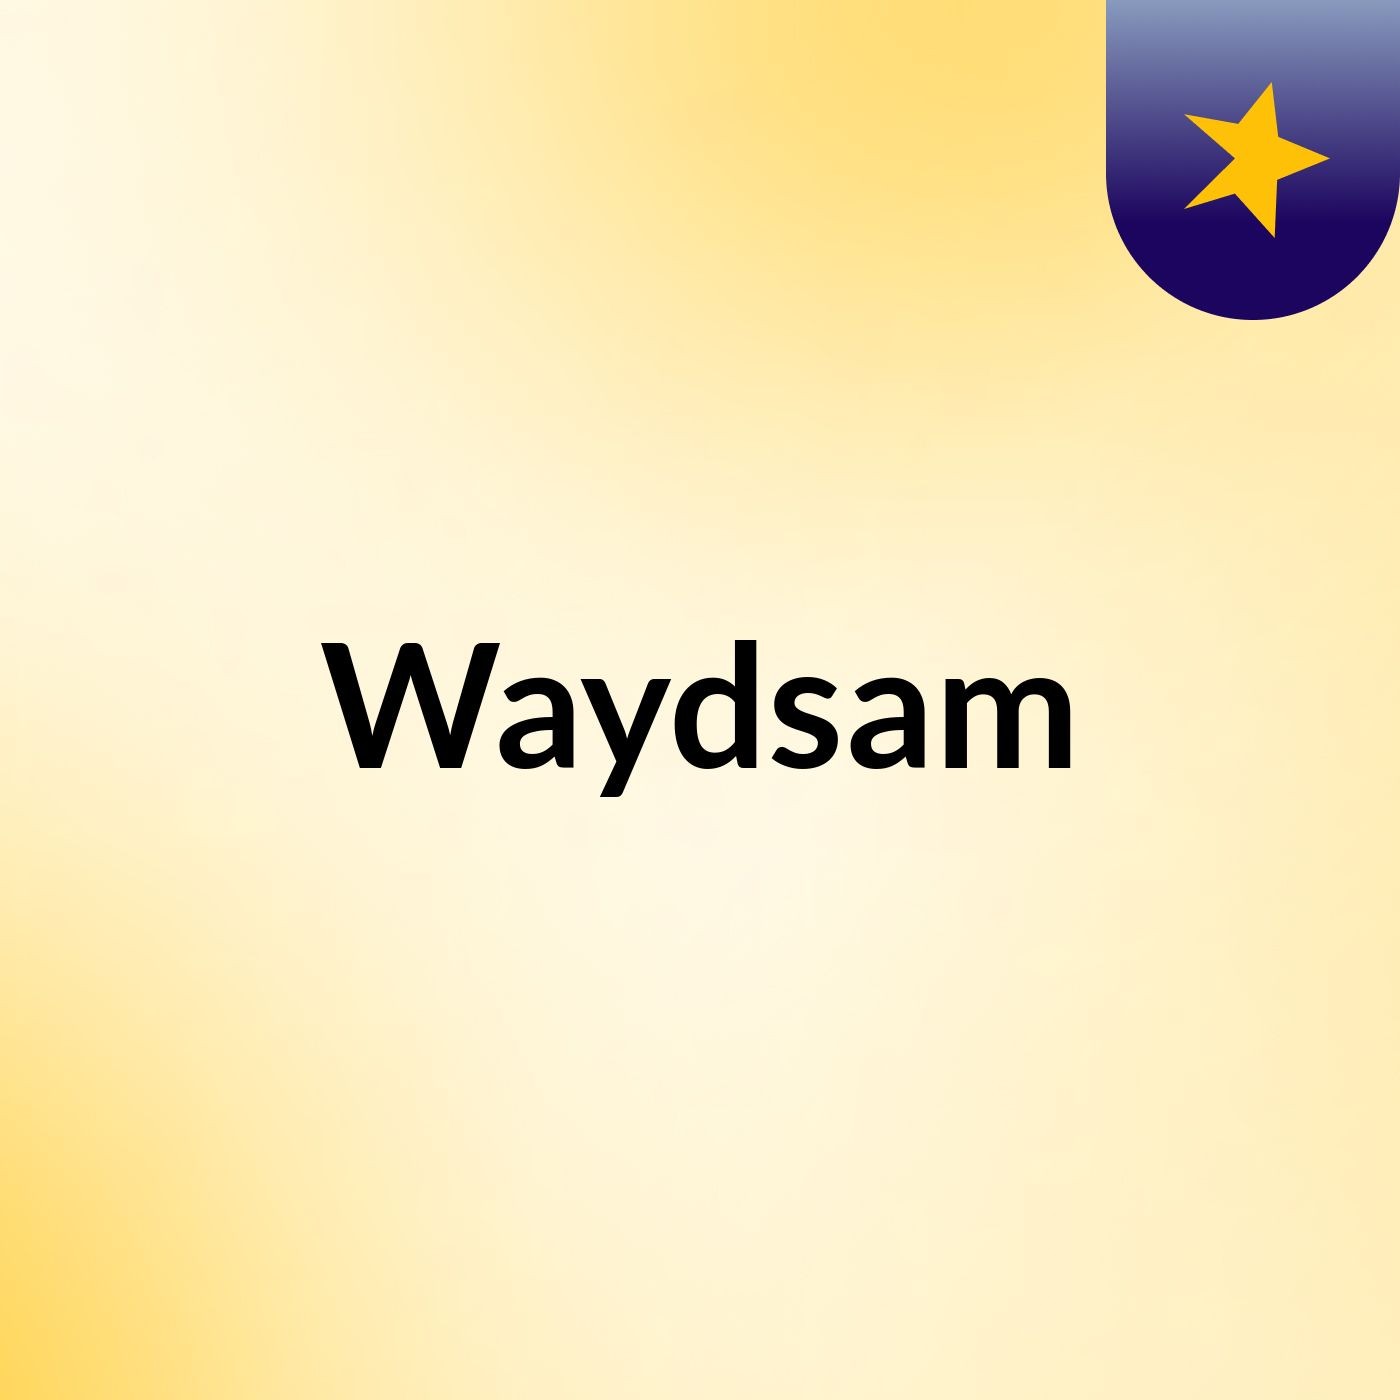 Waydsam